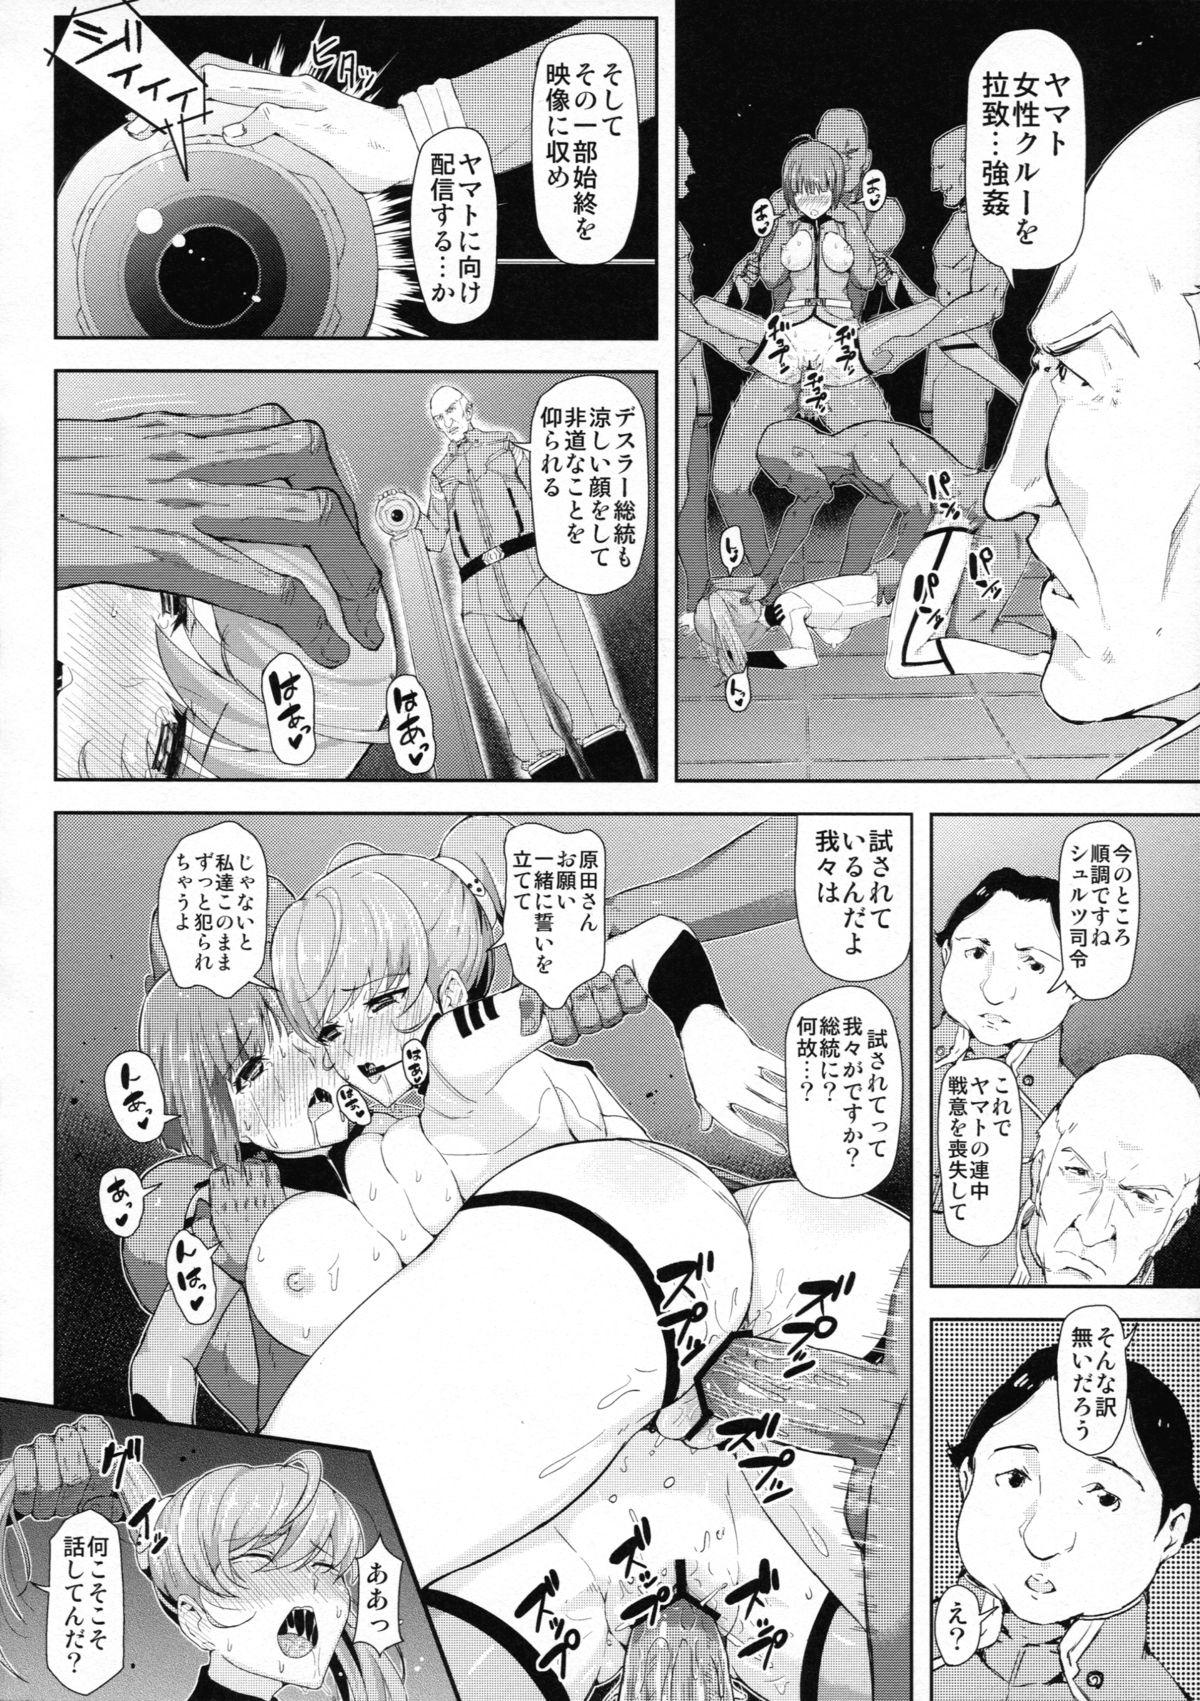 Cams Teron no Ryoshuu - Space battleship yamato Thuylinh - Page 4